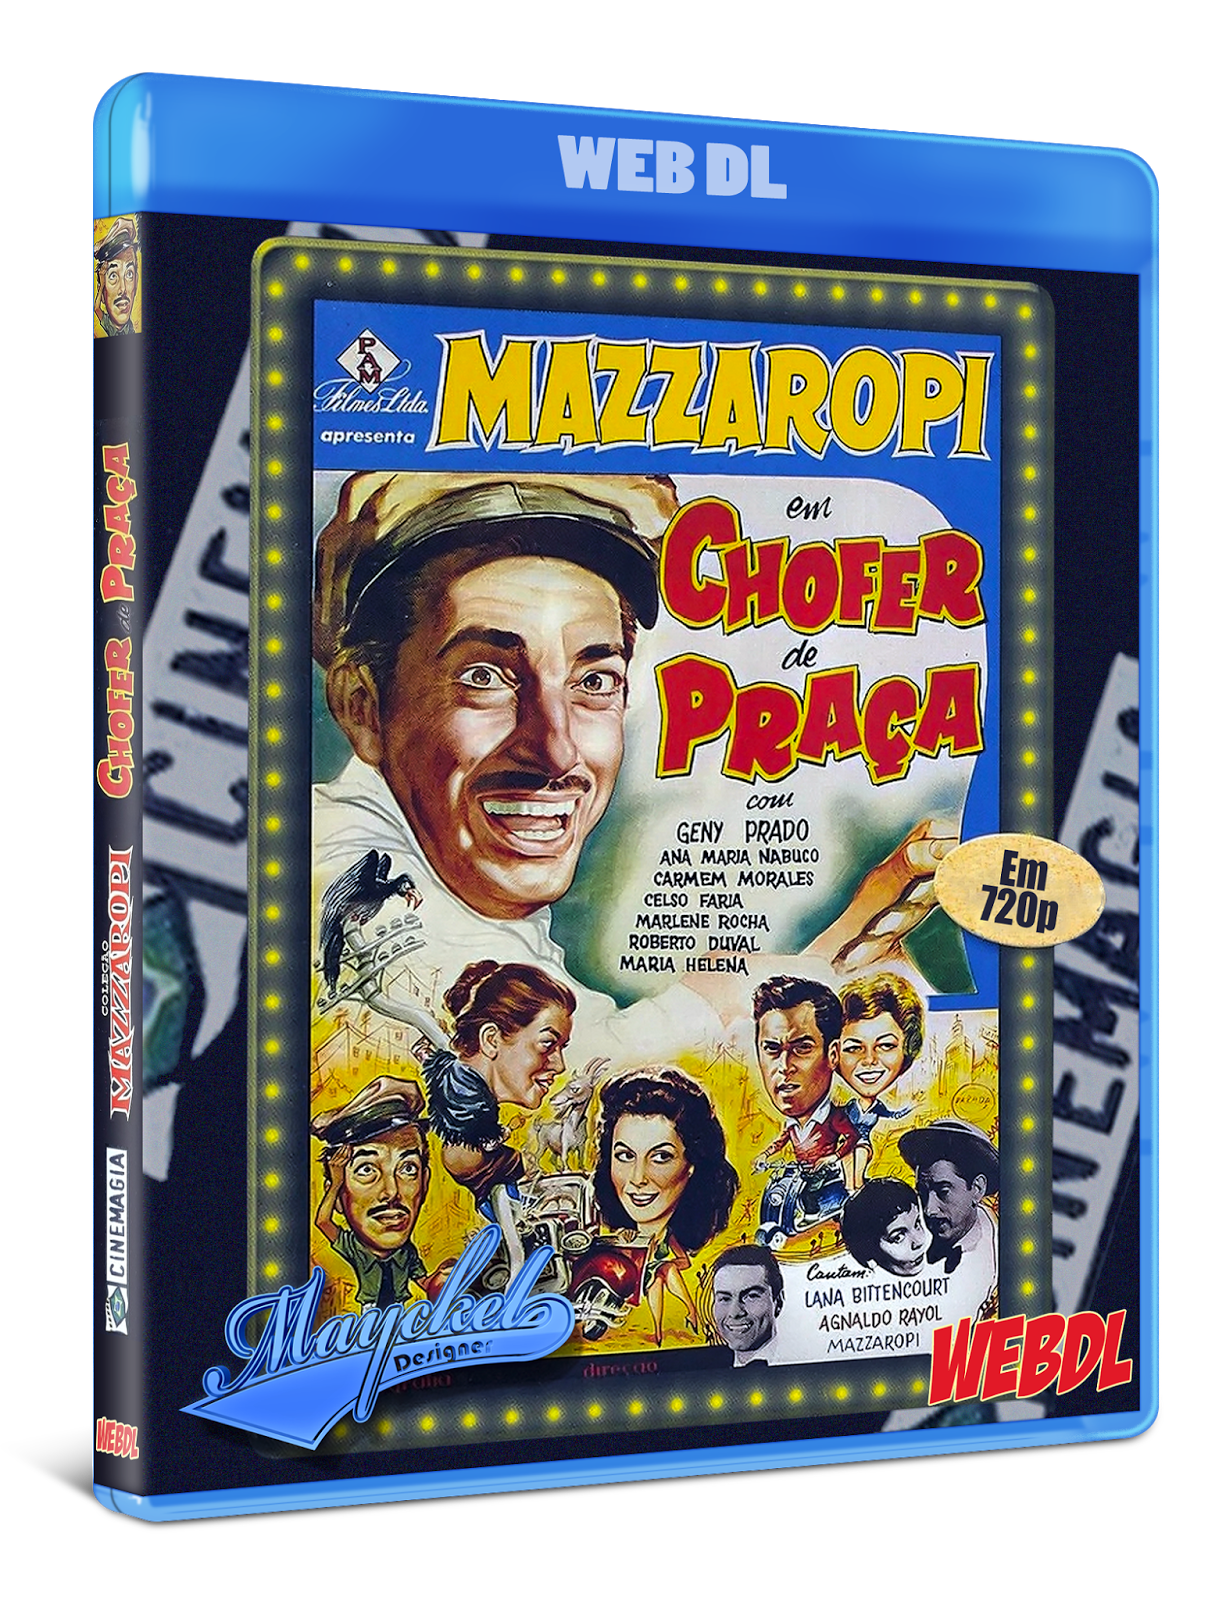 Chofer de Praça (1958) — The Movie Database (TMDB)